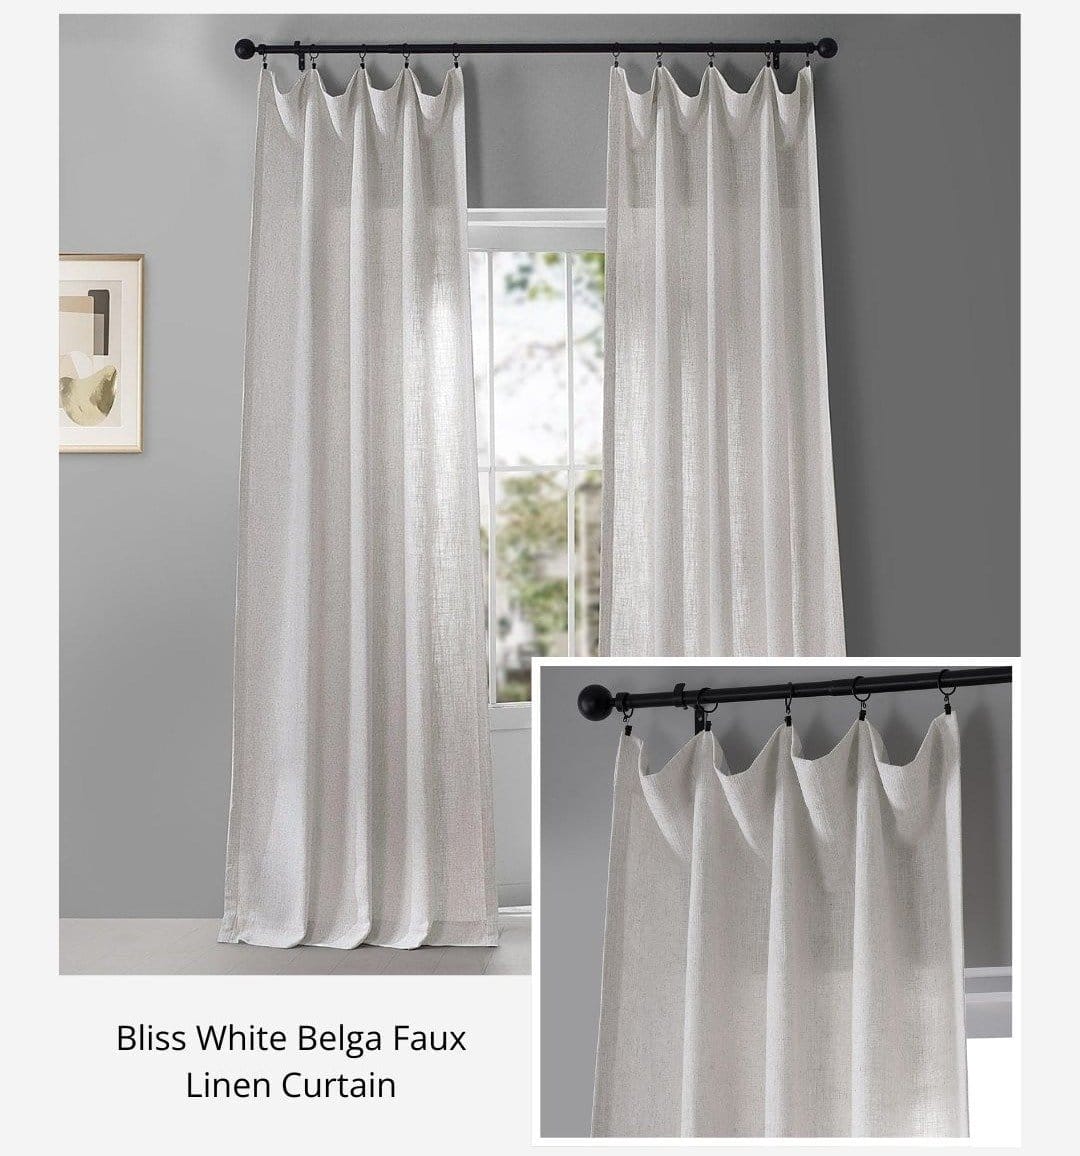 Bliss White Belga Faux Linen Curtain